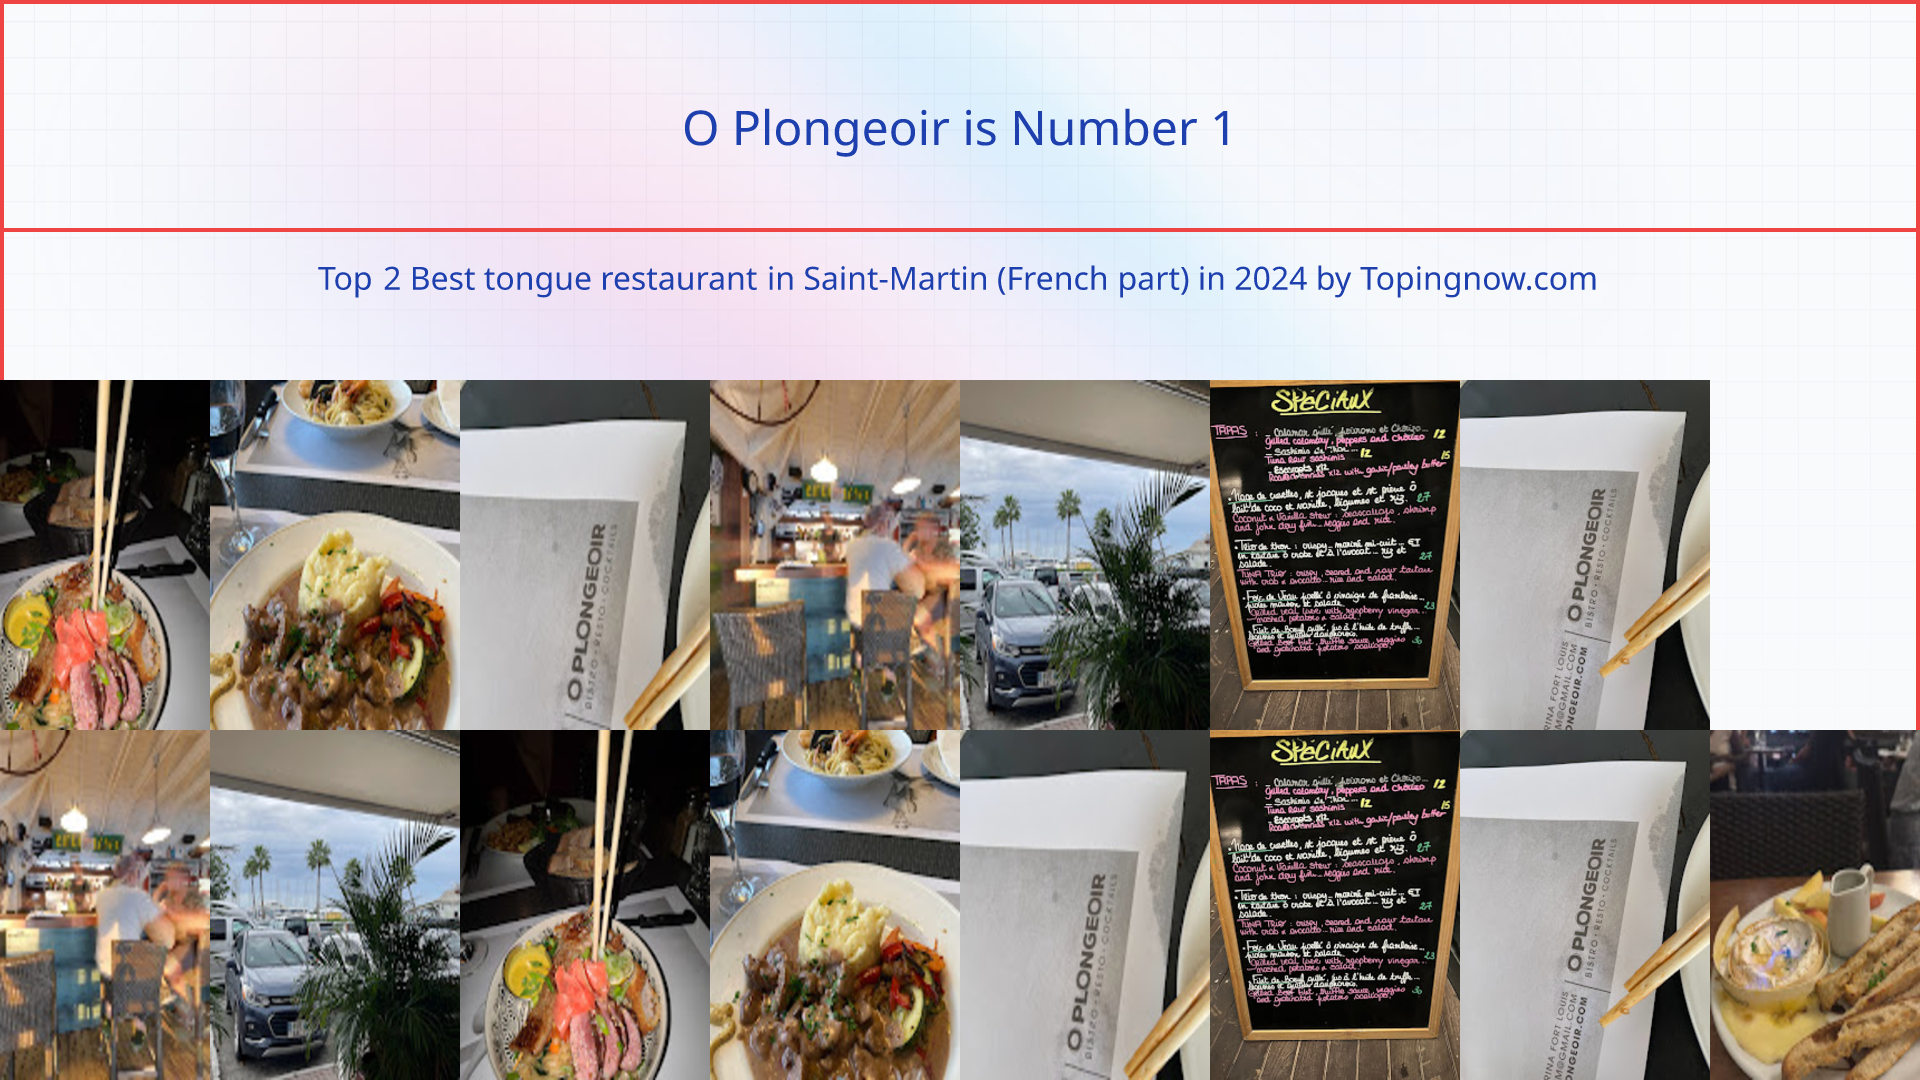 O Plongeoir: Top 2 Best tongue restaurant in Saint-Martin (French part) in 2024